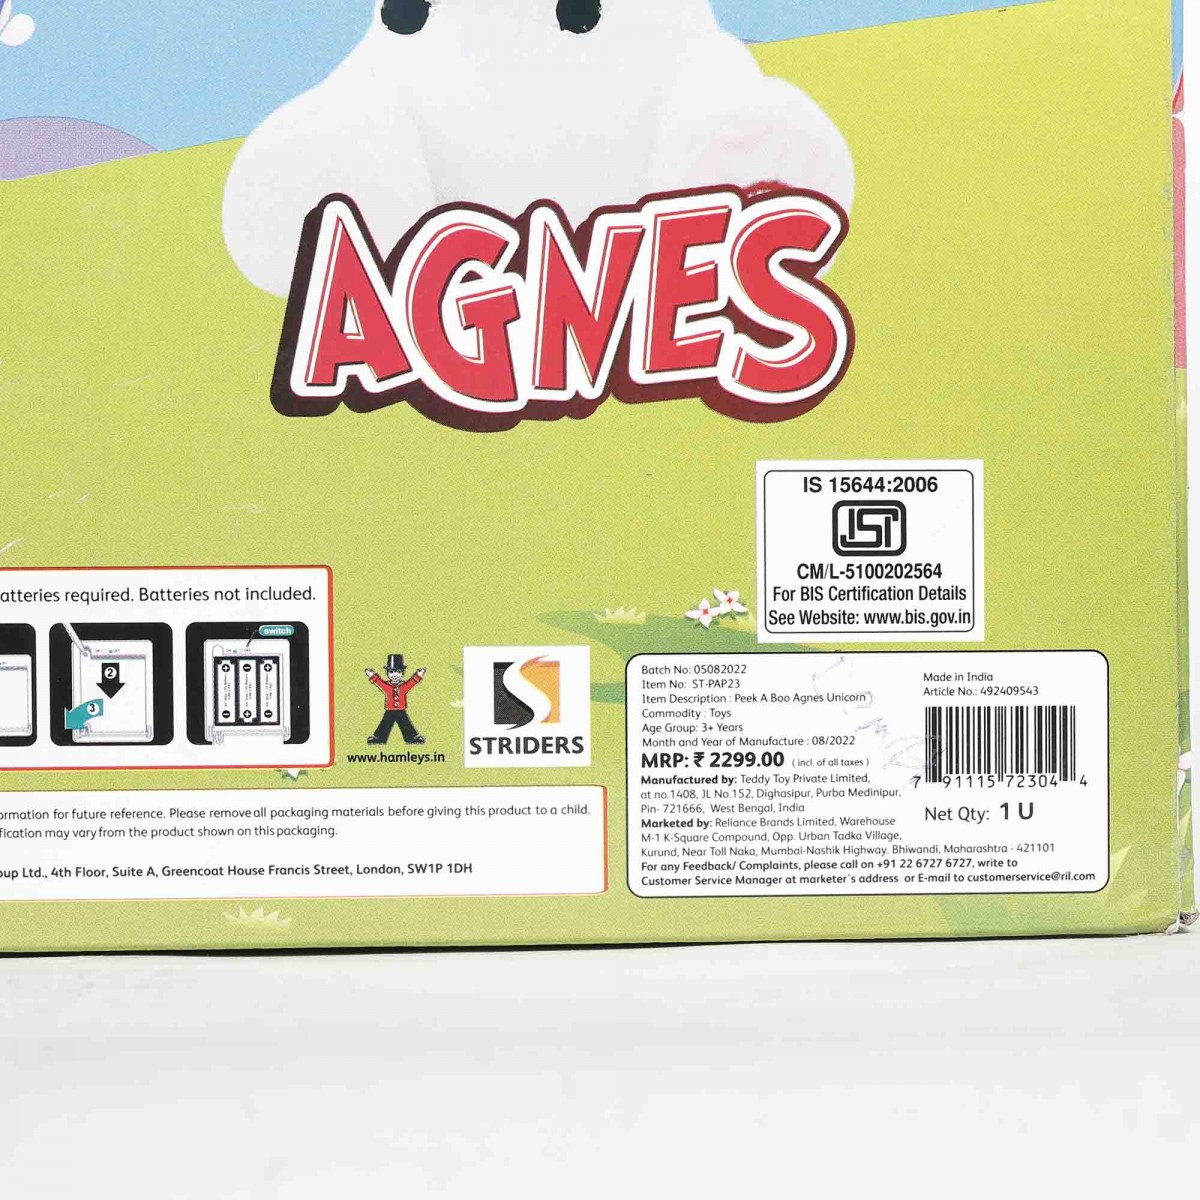 Hamleys Pugs & Play Agnes Unicorn Soft Toys for Kids, White, 3Y+